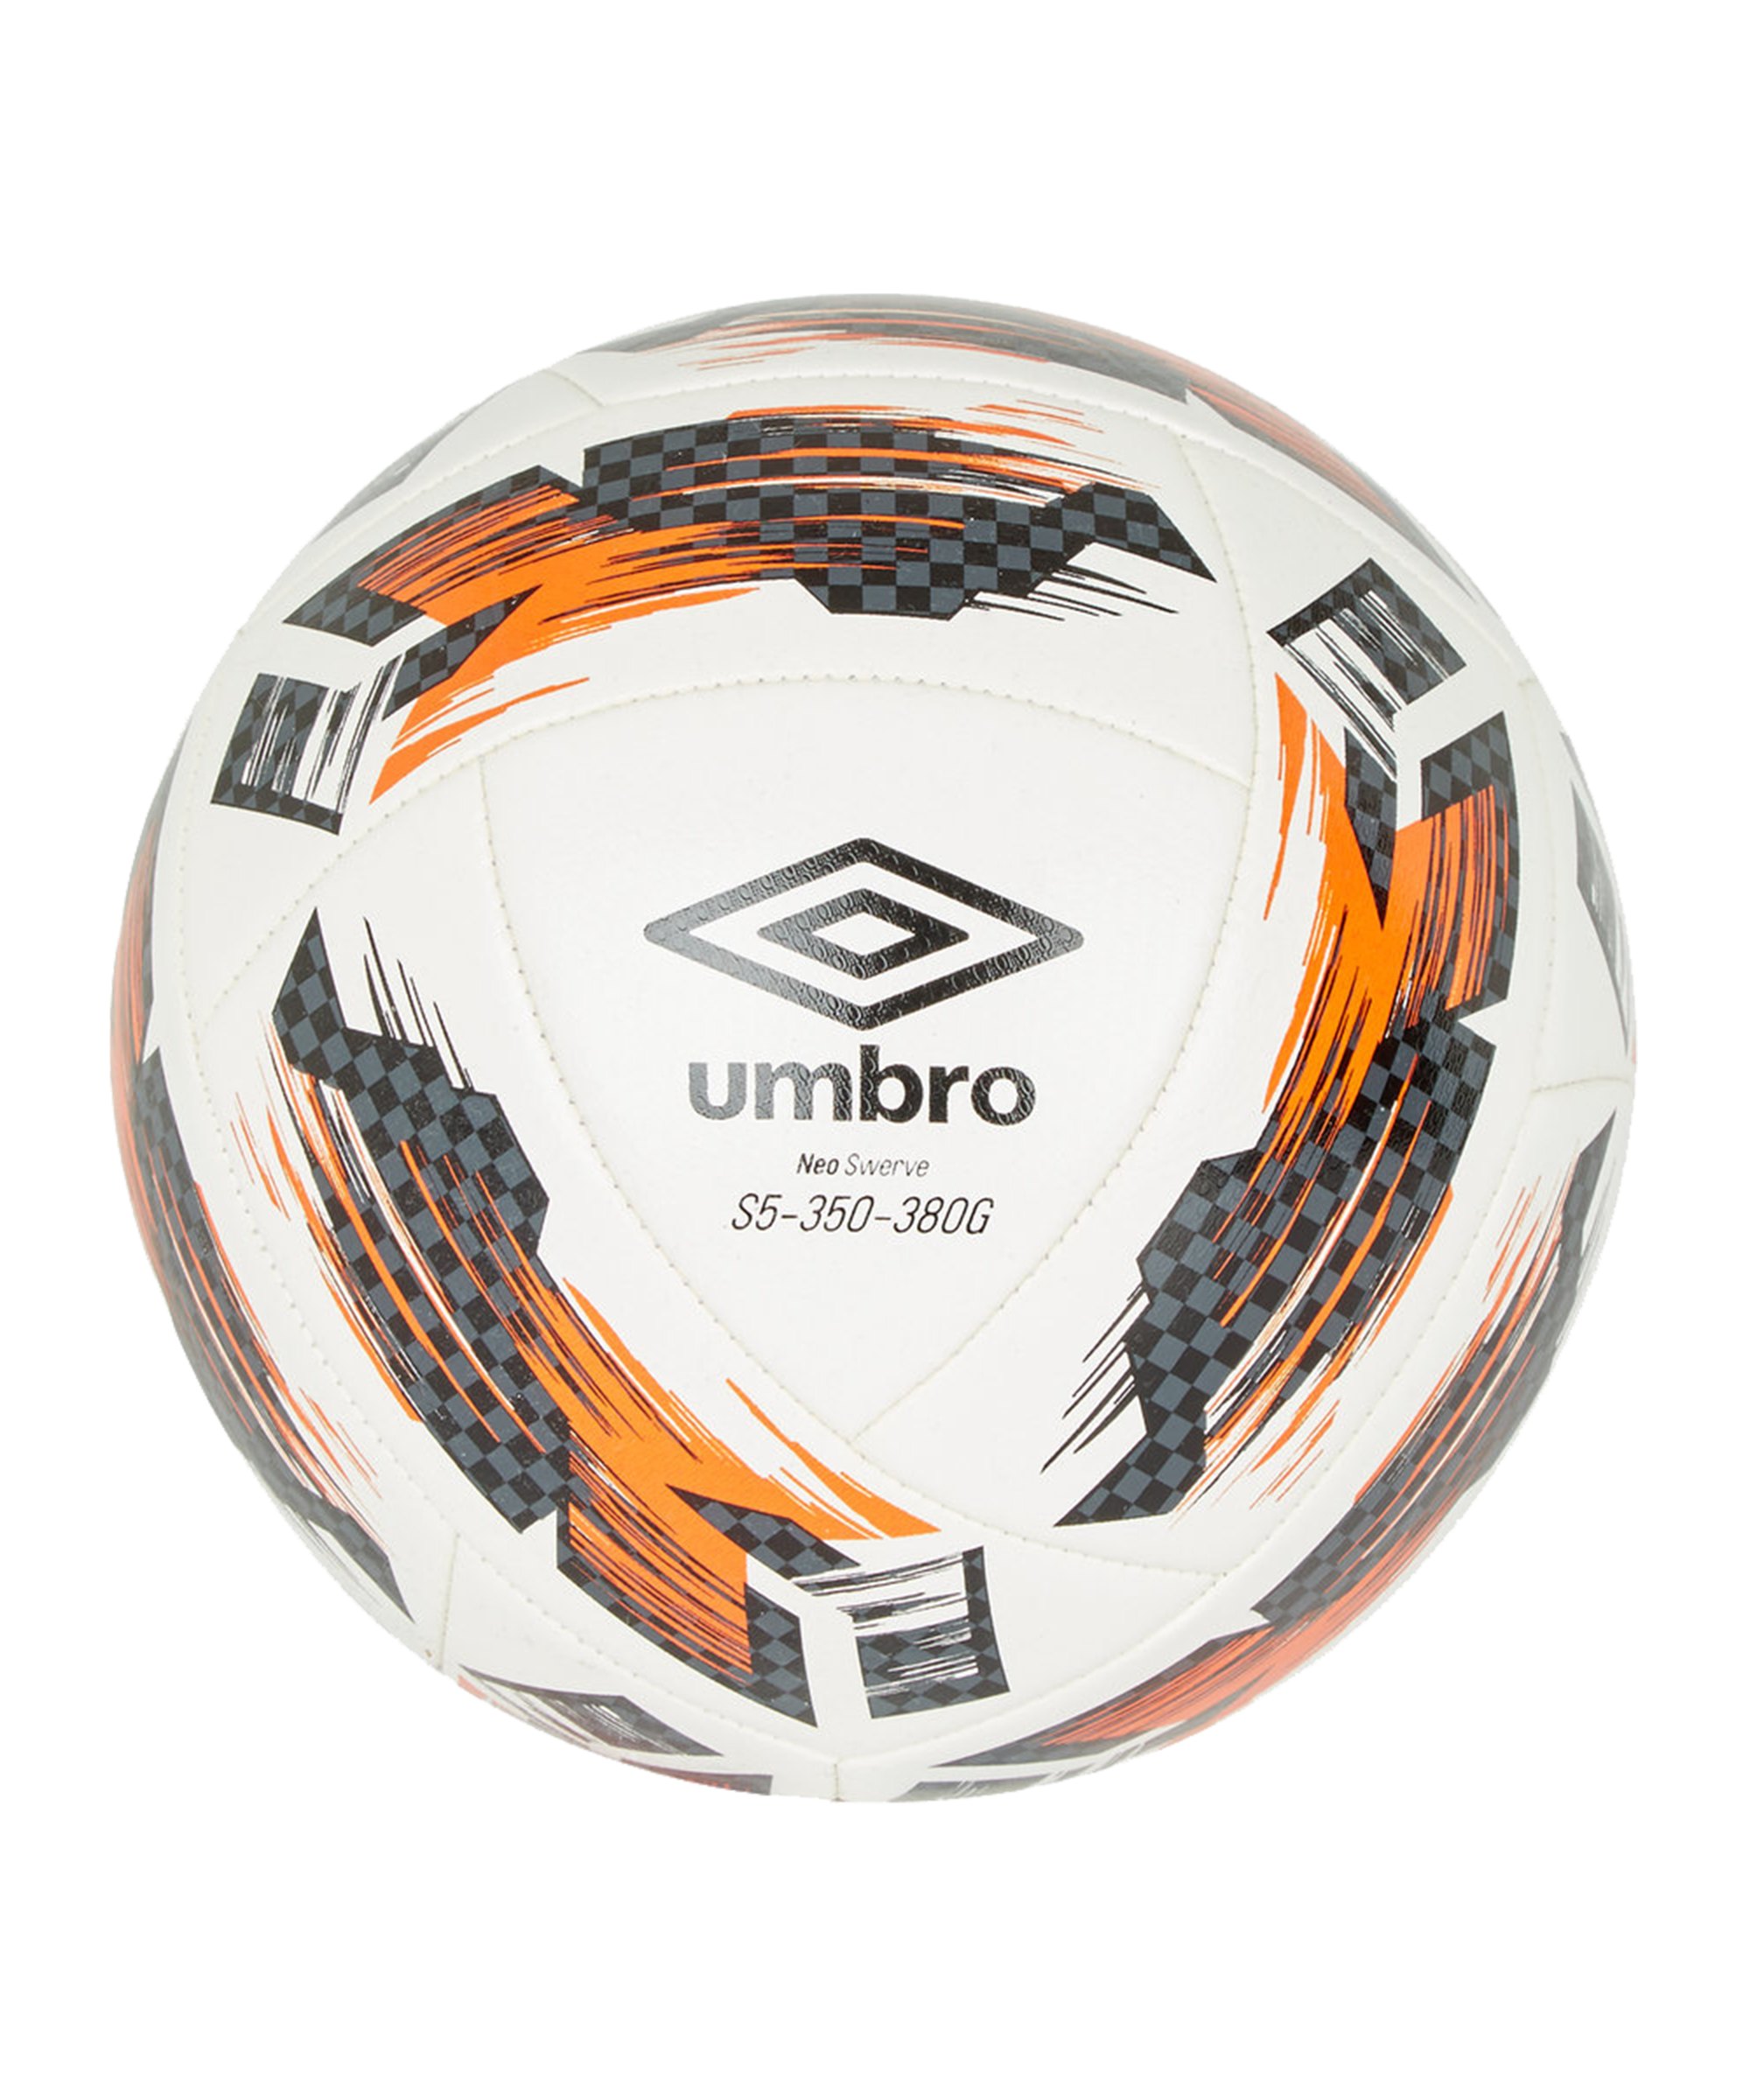 Umbro Neo Swerve Trainingsball 350-380 Gramm F0V6 - weiss